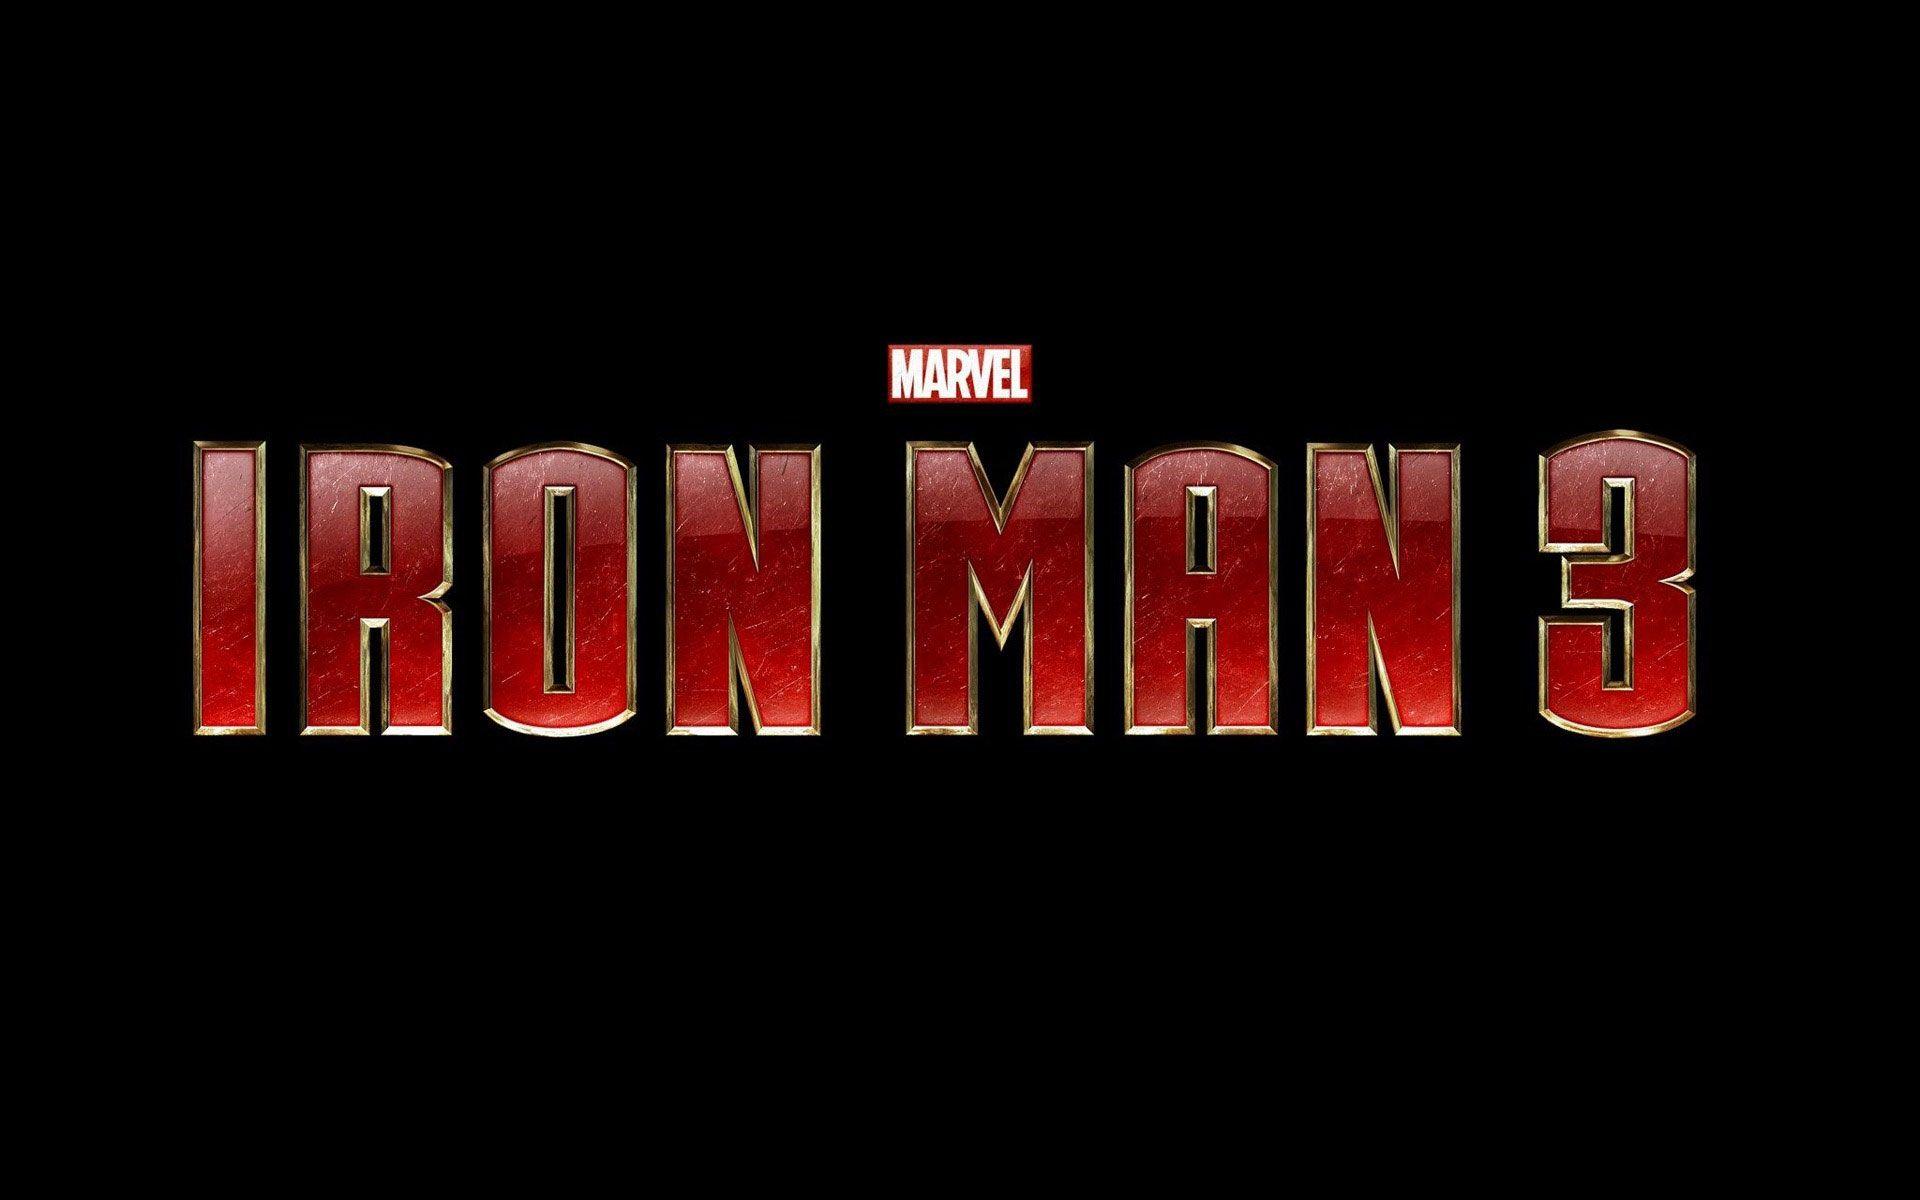 Marvel Iron Man HD Wallpaper in HD. HD Wallpaper